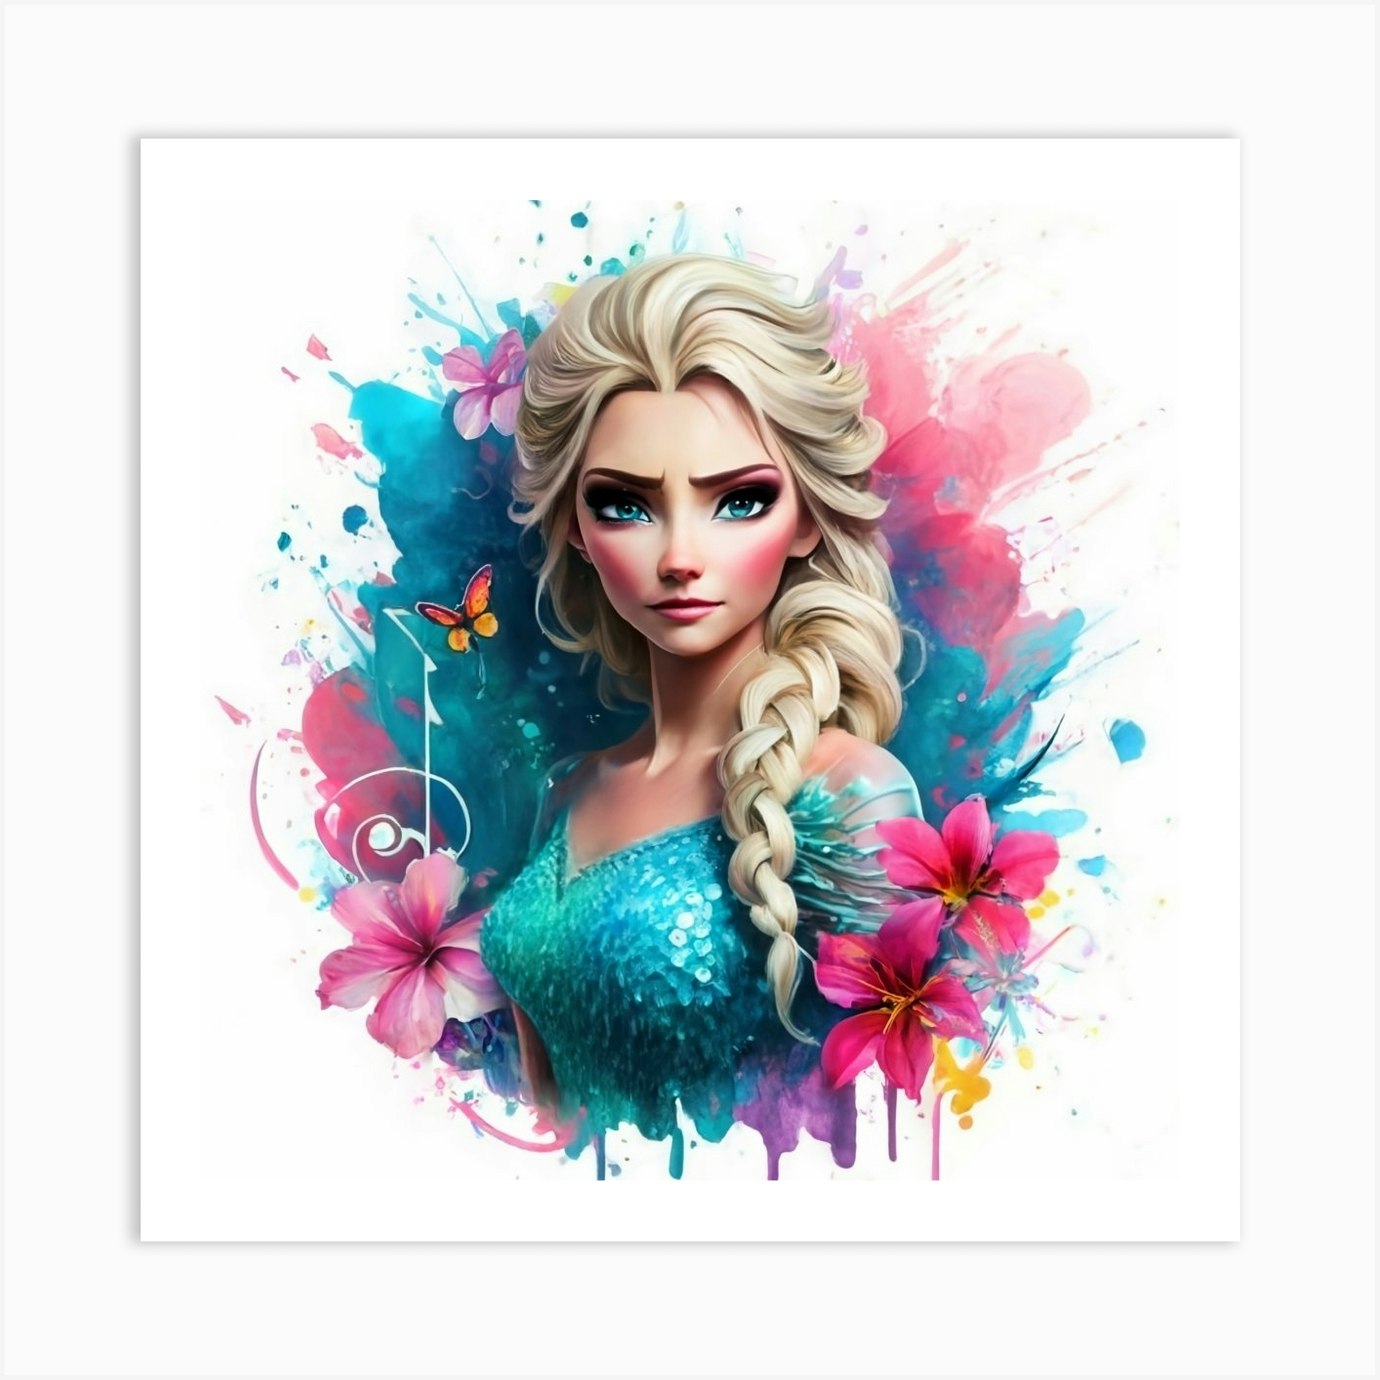 Canvas print Frozen - Elsa Blue  Fine Art Prints & Wall Decorations